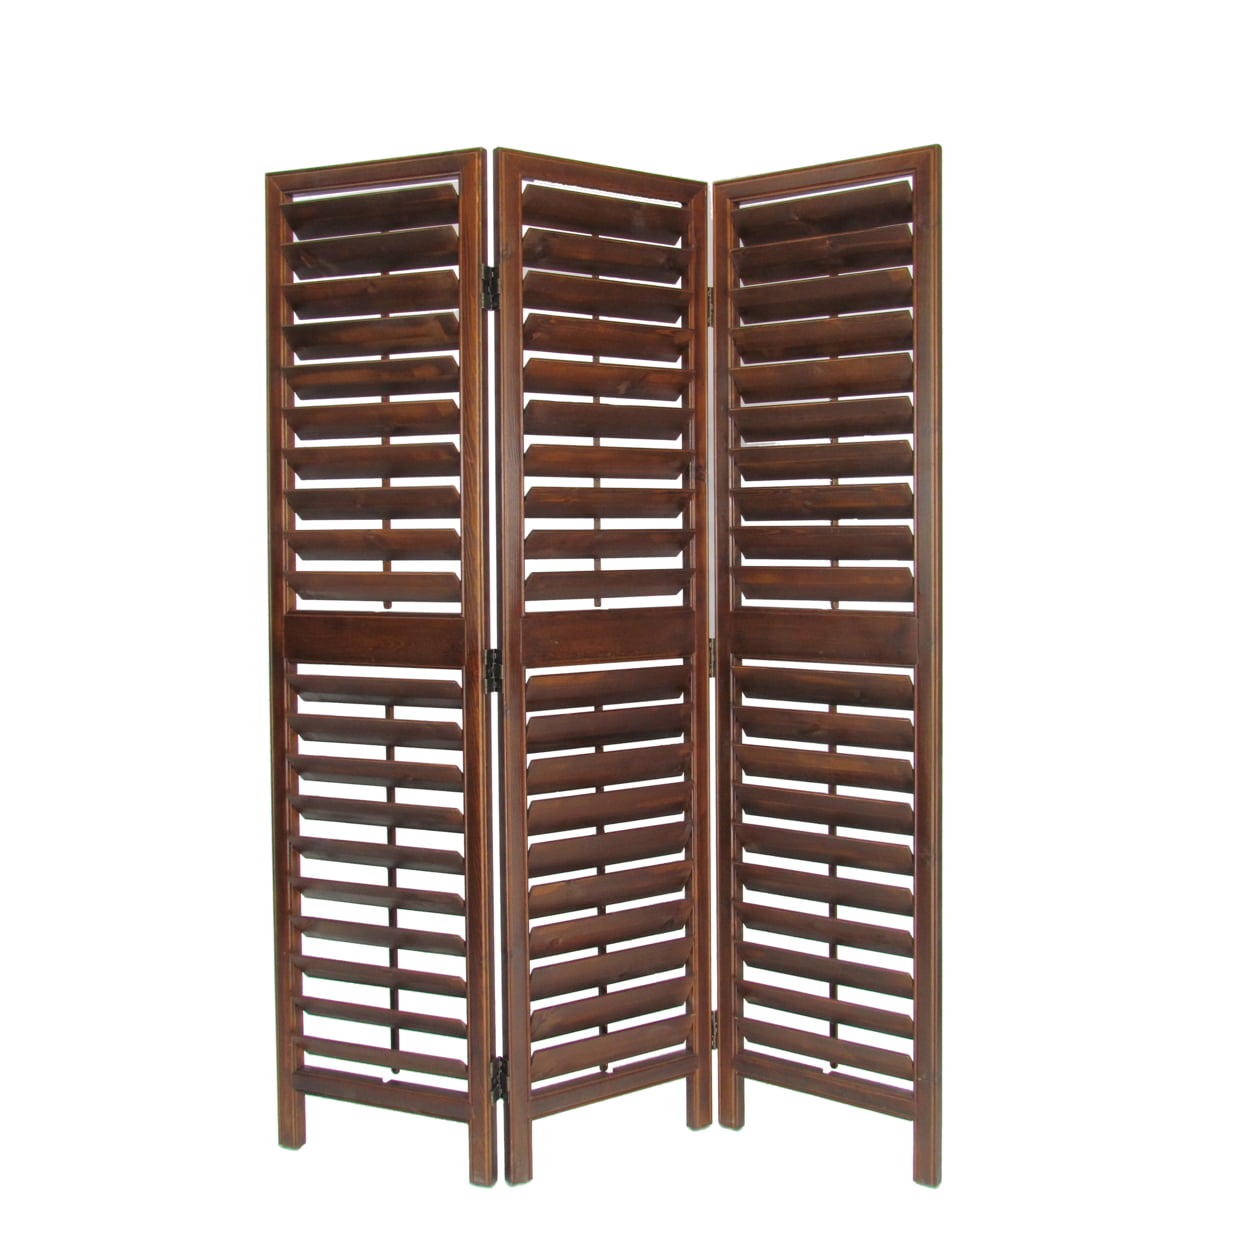 Picture of Benjara BM213479 Wooden 3 Panel Room Divider with Slatted Design - Brown